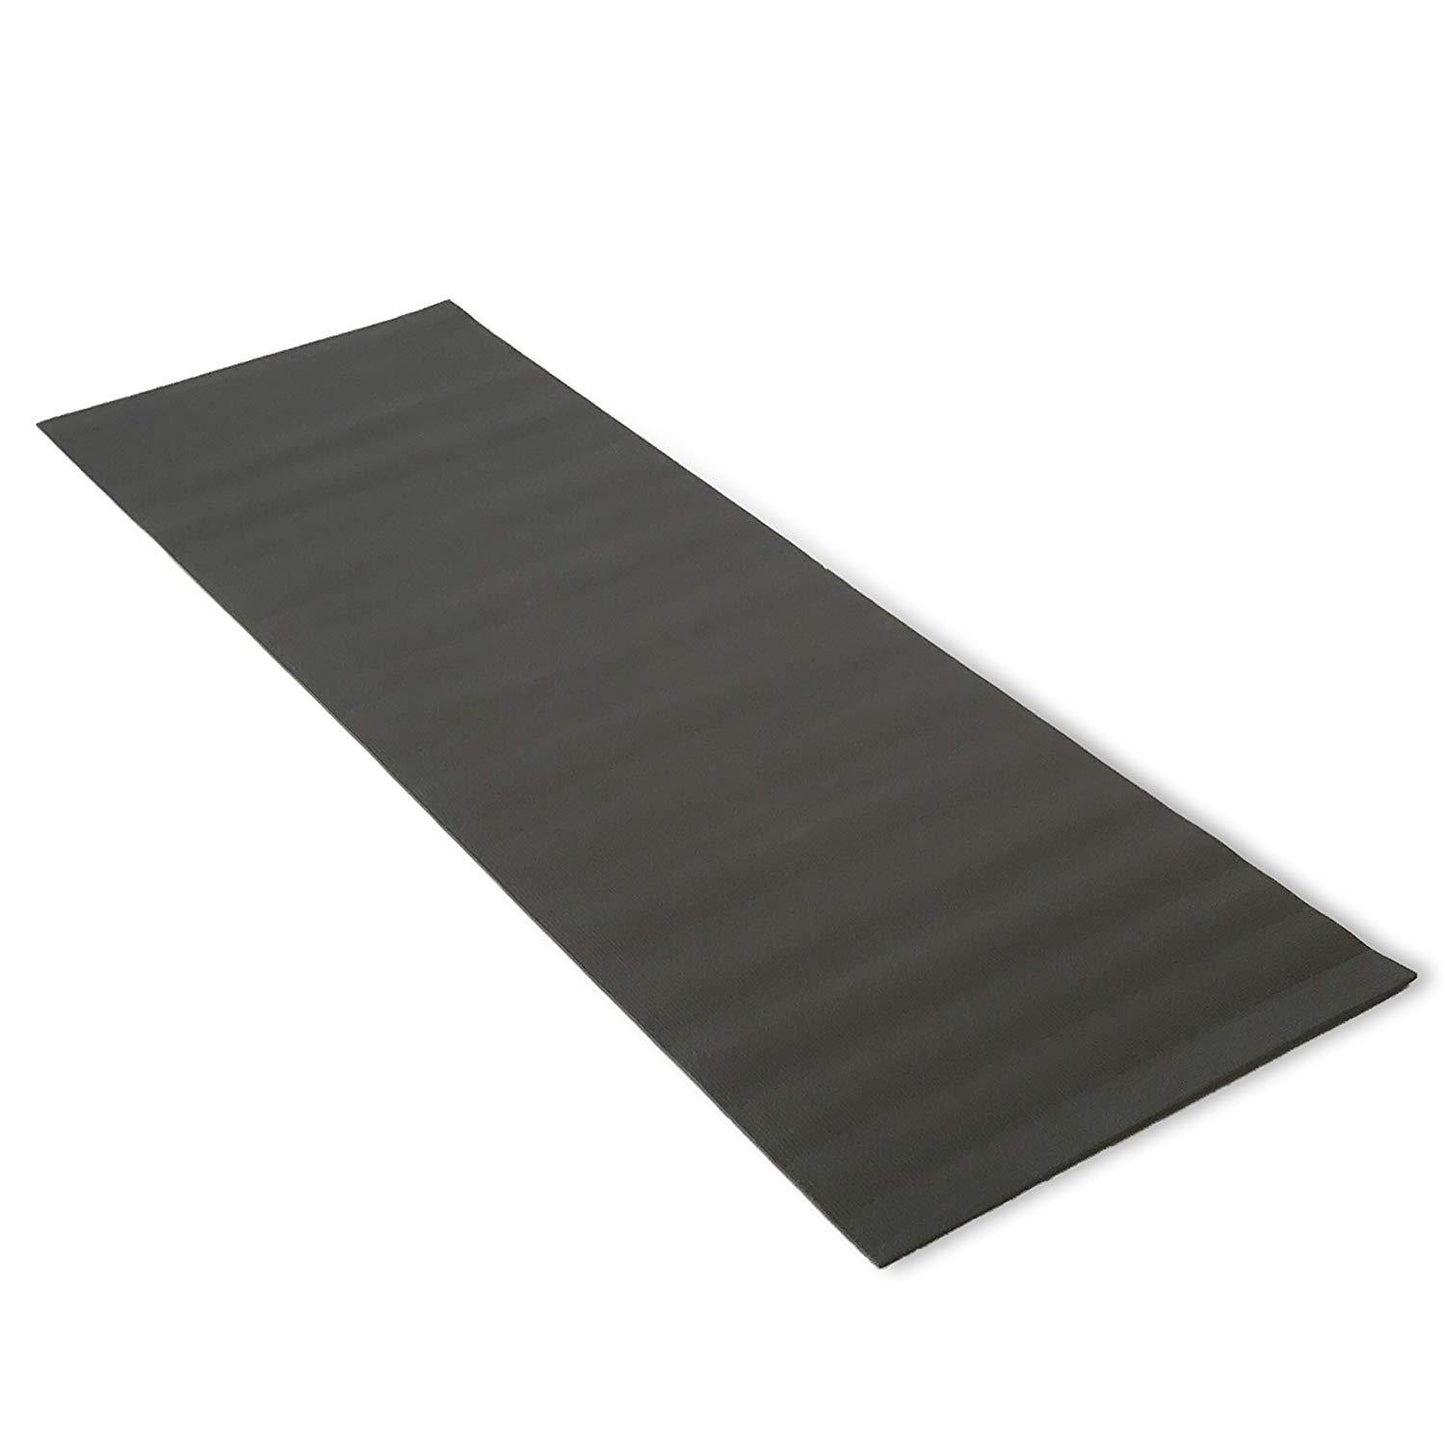 Yoga Rat Mat Unisex Pro Length 26 X 72 Gray 100% Microfiber